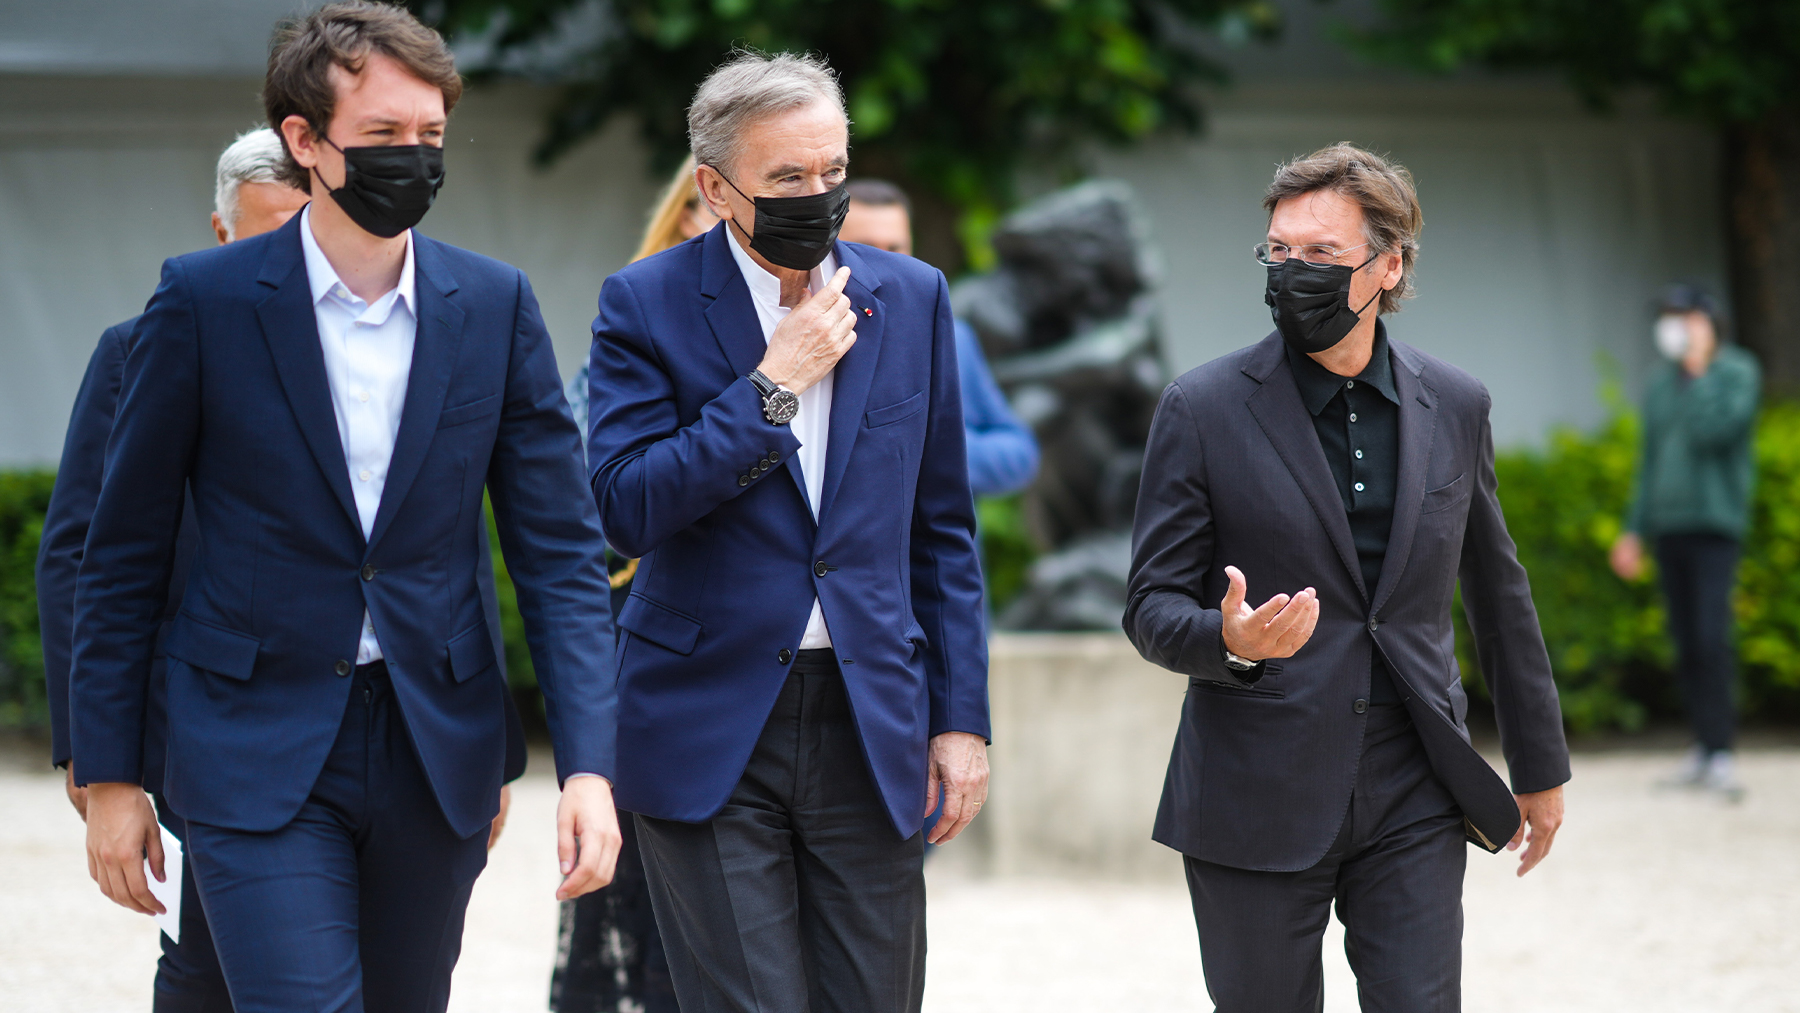 French luxury brand tycoon Bernard Arnault now in China - SHINE News